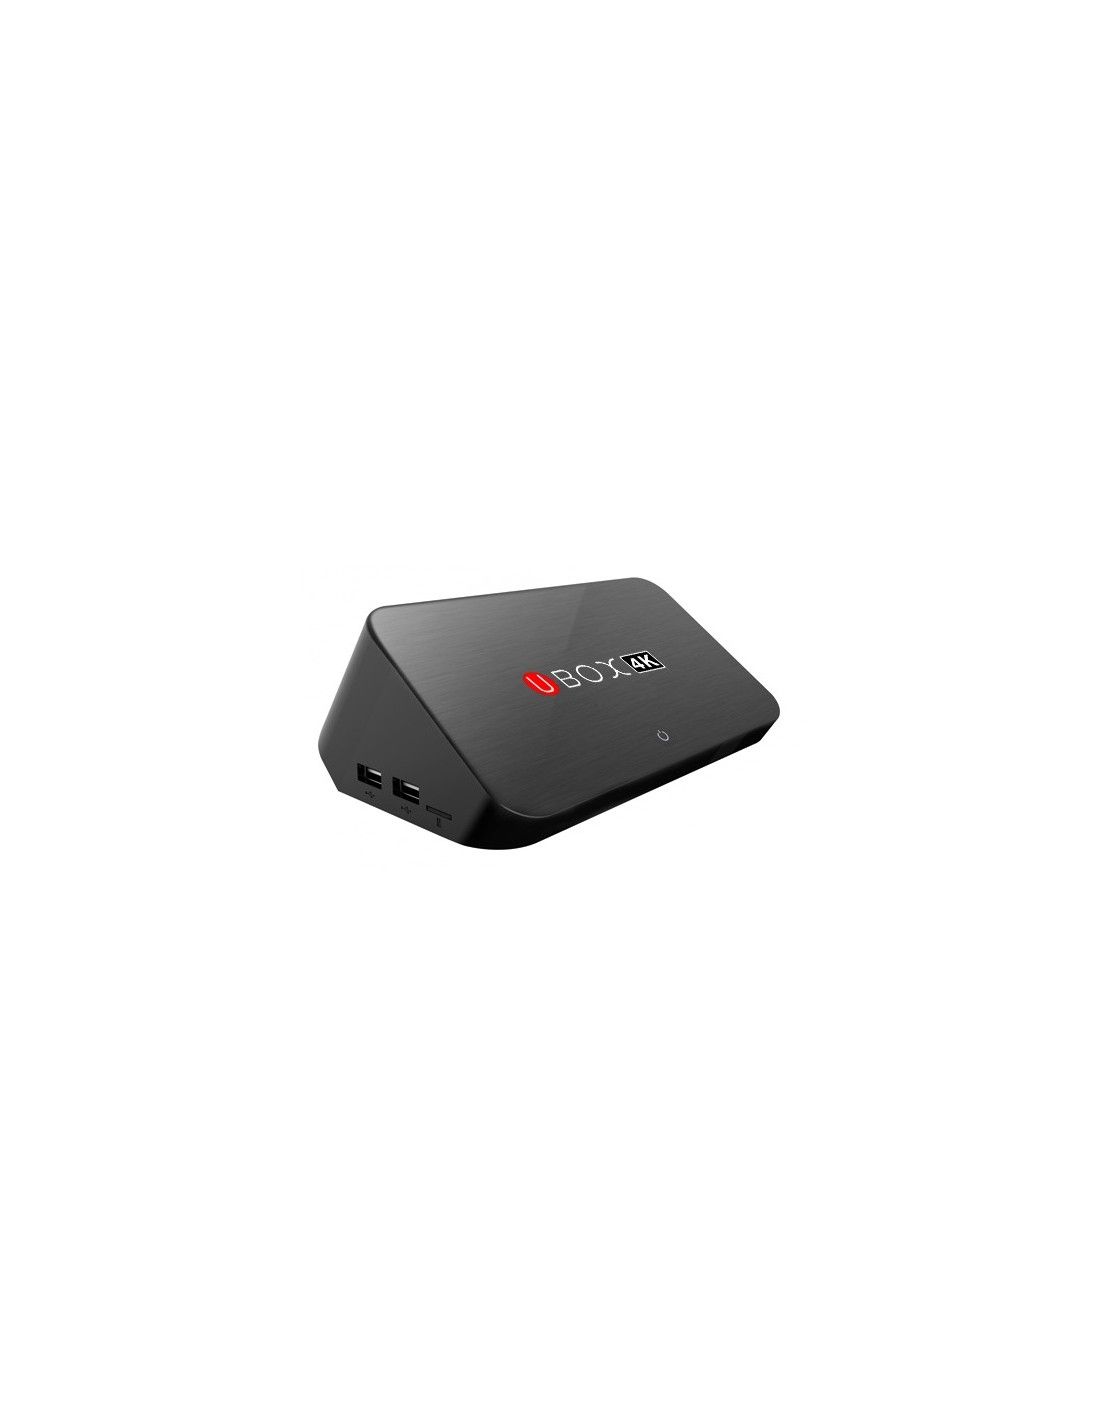 Netxeon - Boitier TV 4K Android / XBMC - RK3288 (Tronfy)